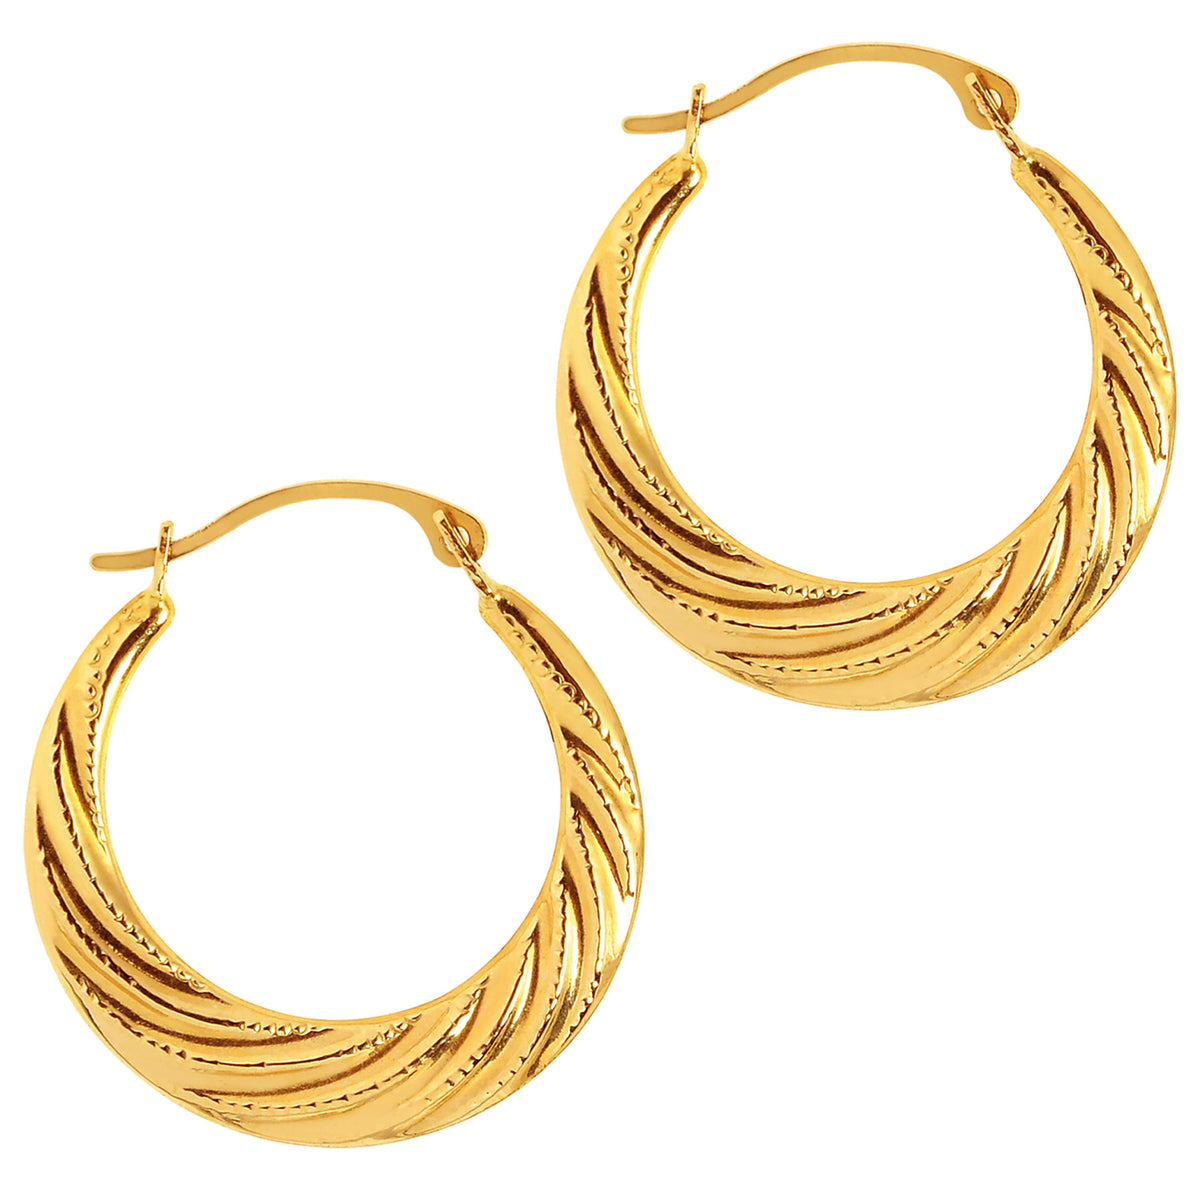 10k Yellow Gold Swirl Textured Graduated Round Hoop Earrings, Diameter 20mm fine designer jewelry for men and women